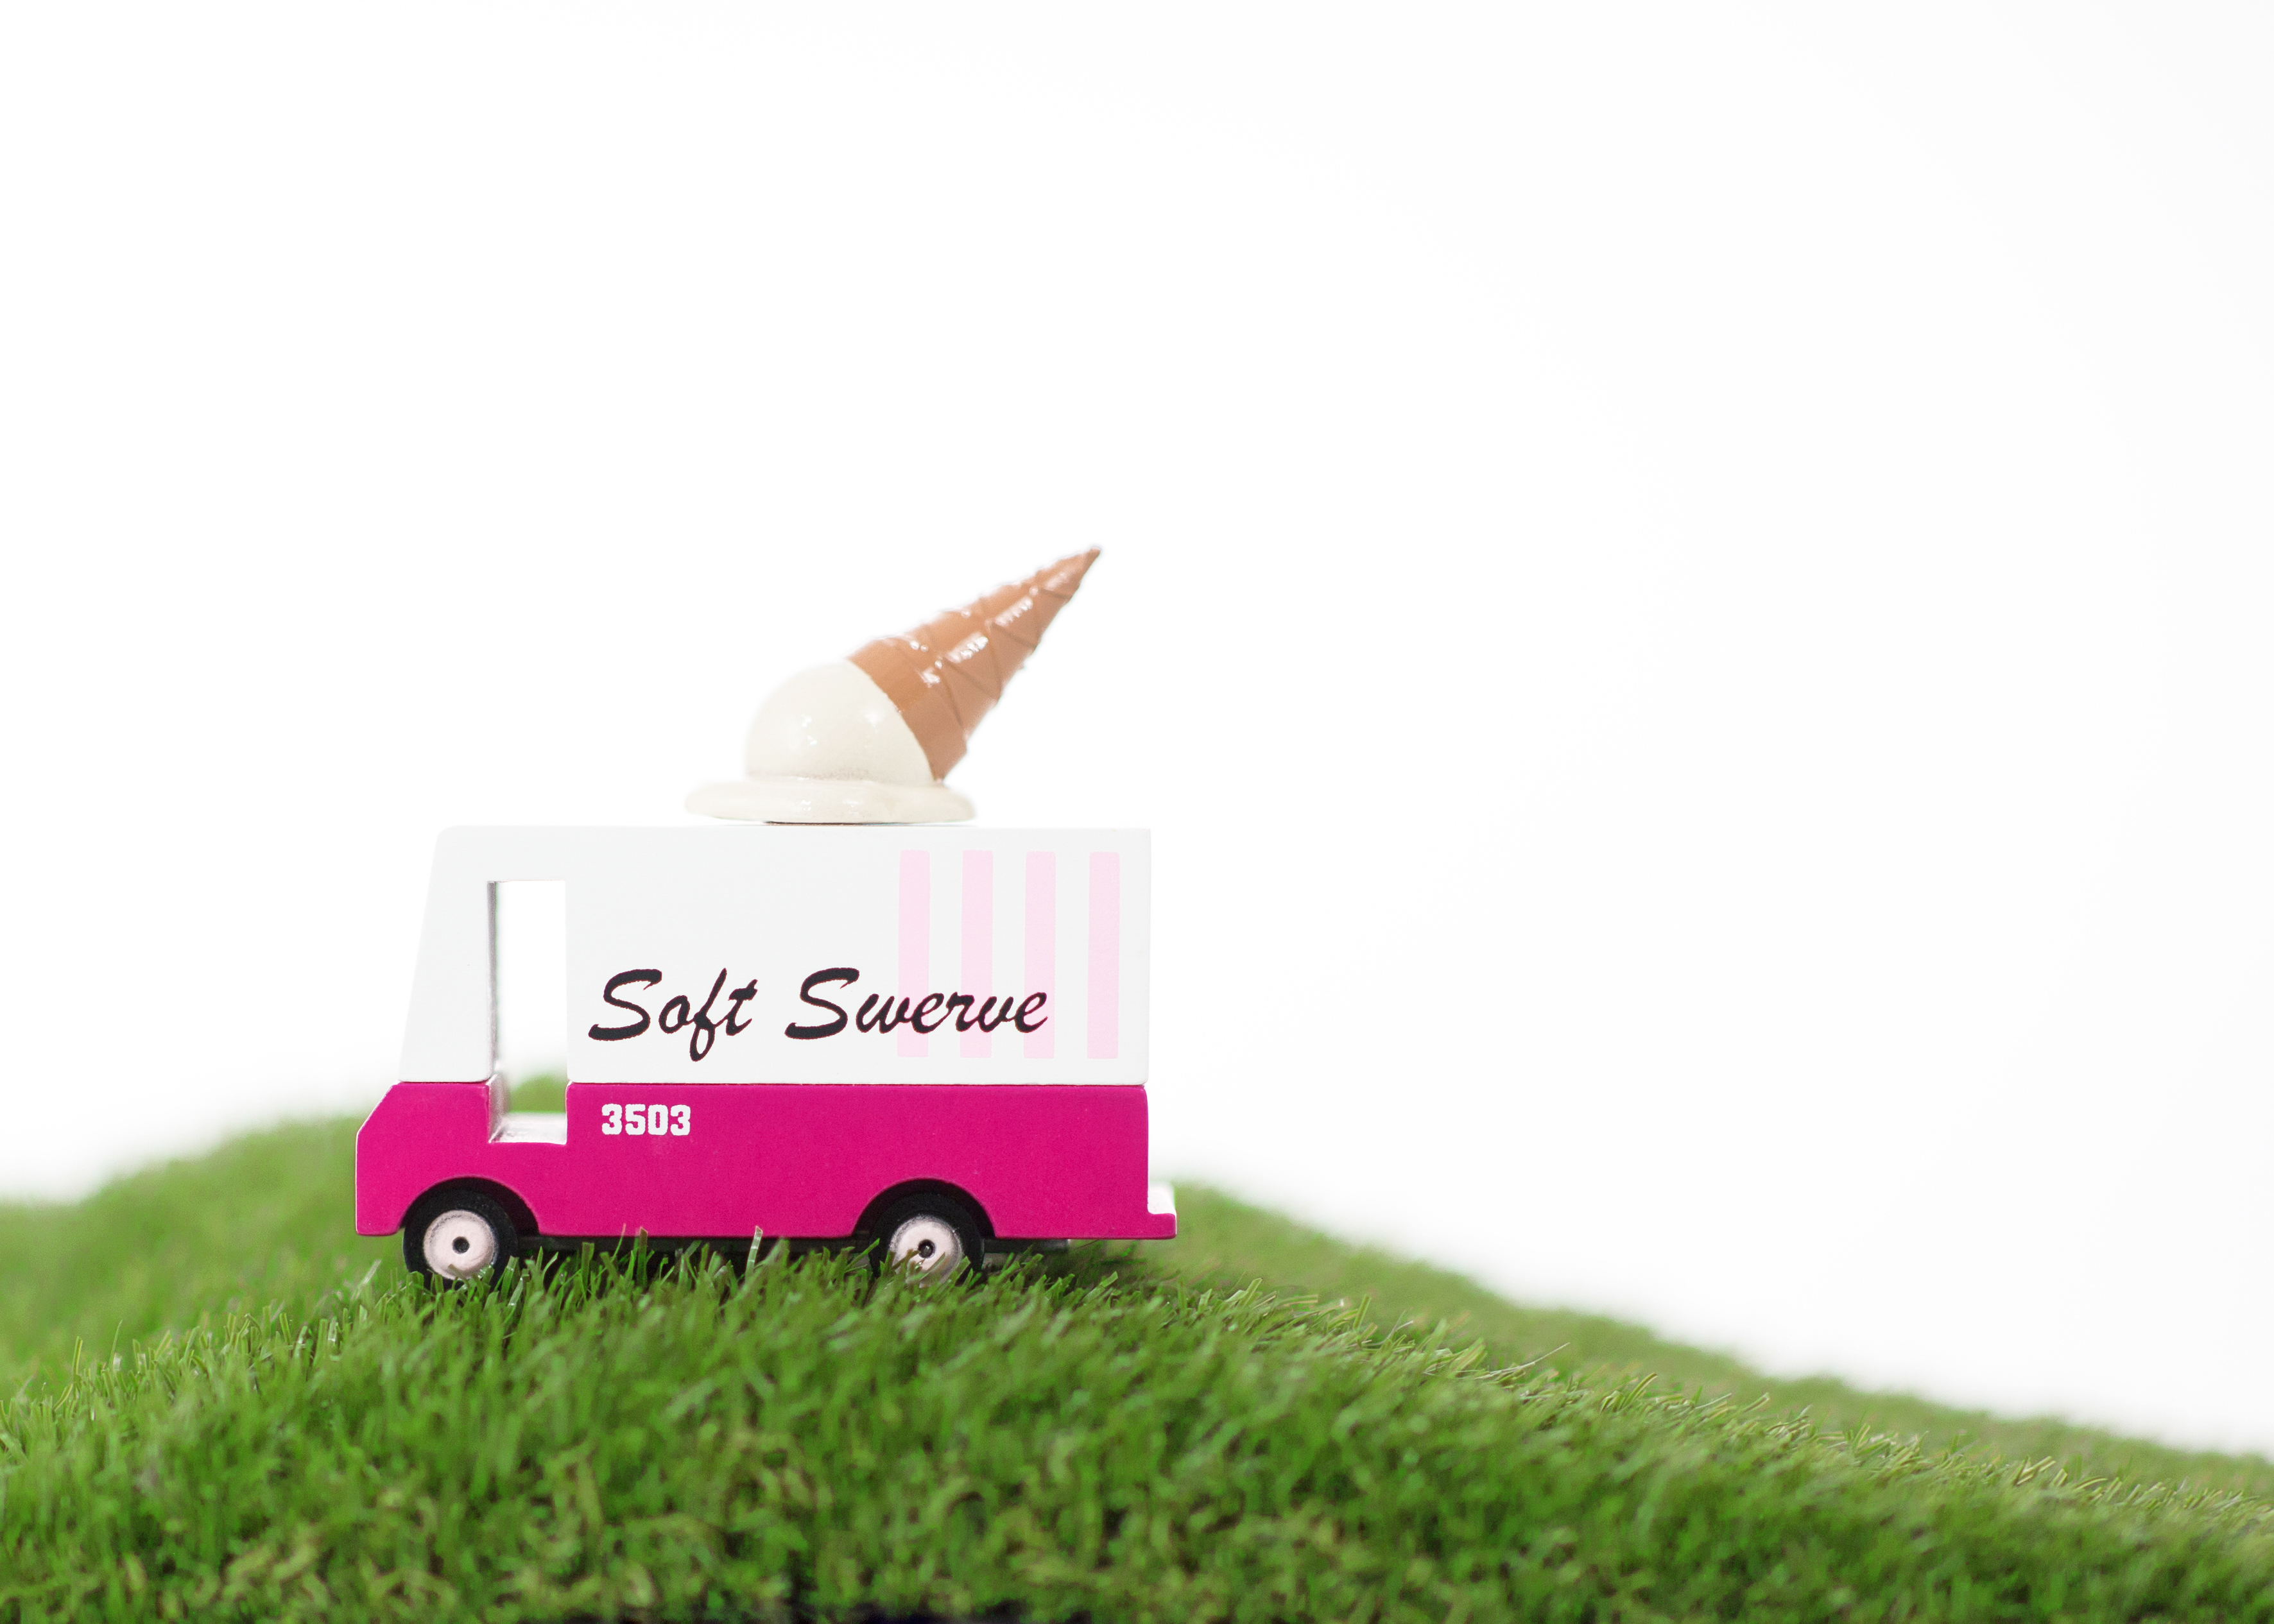 Candycar - Icecream Van